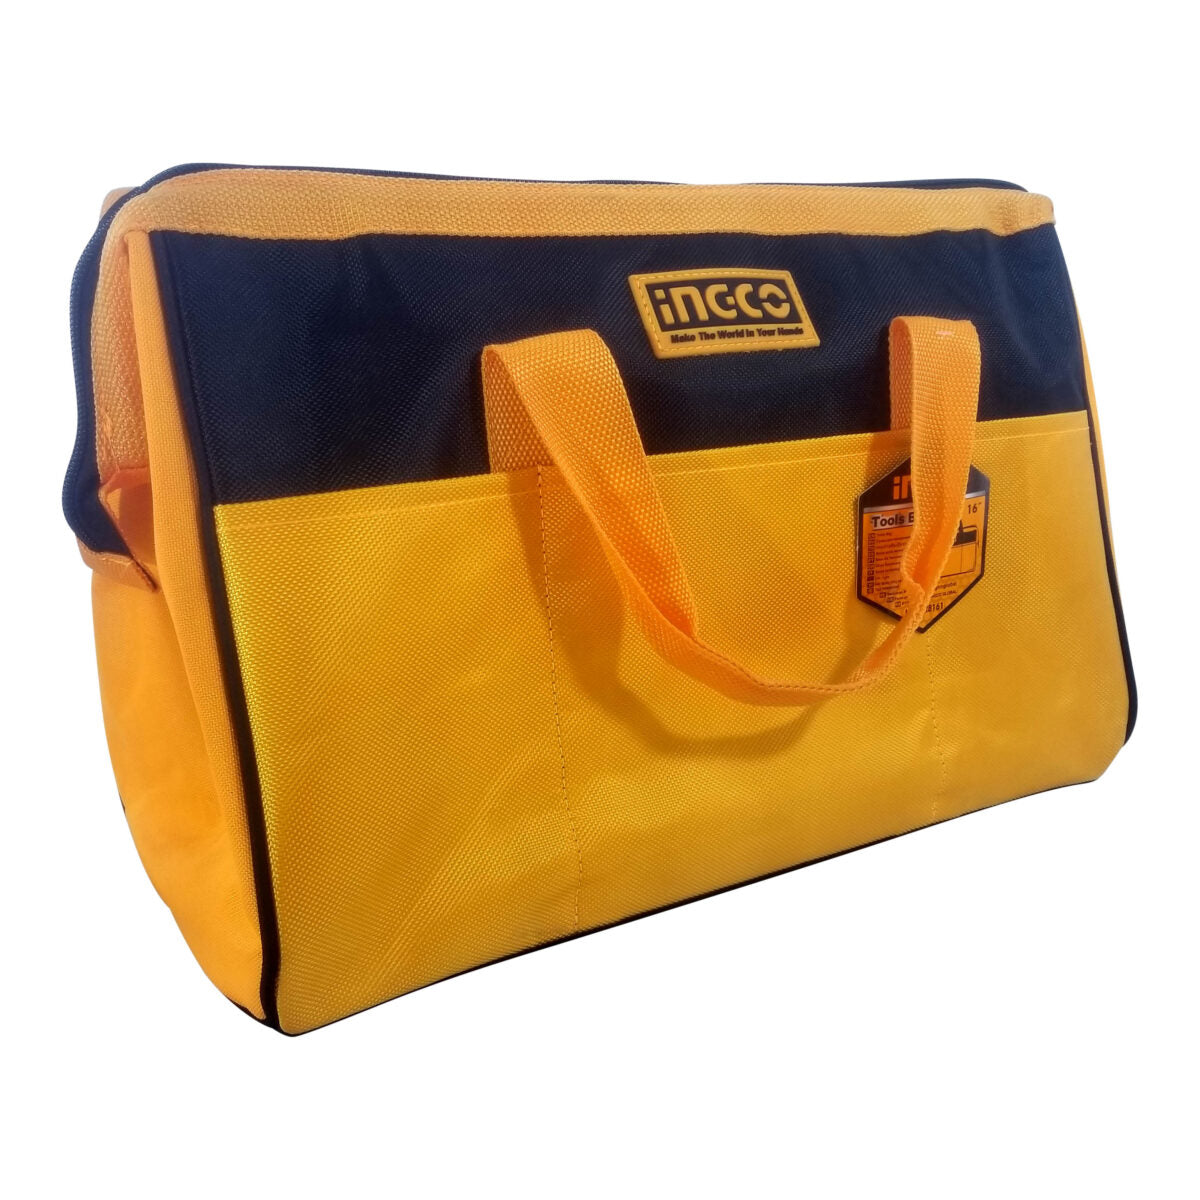 Ingco - Tools Bag HTBG28161